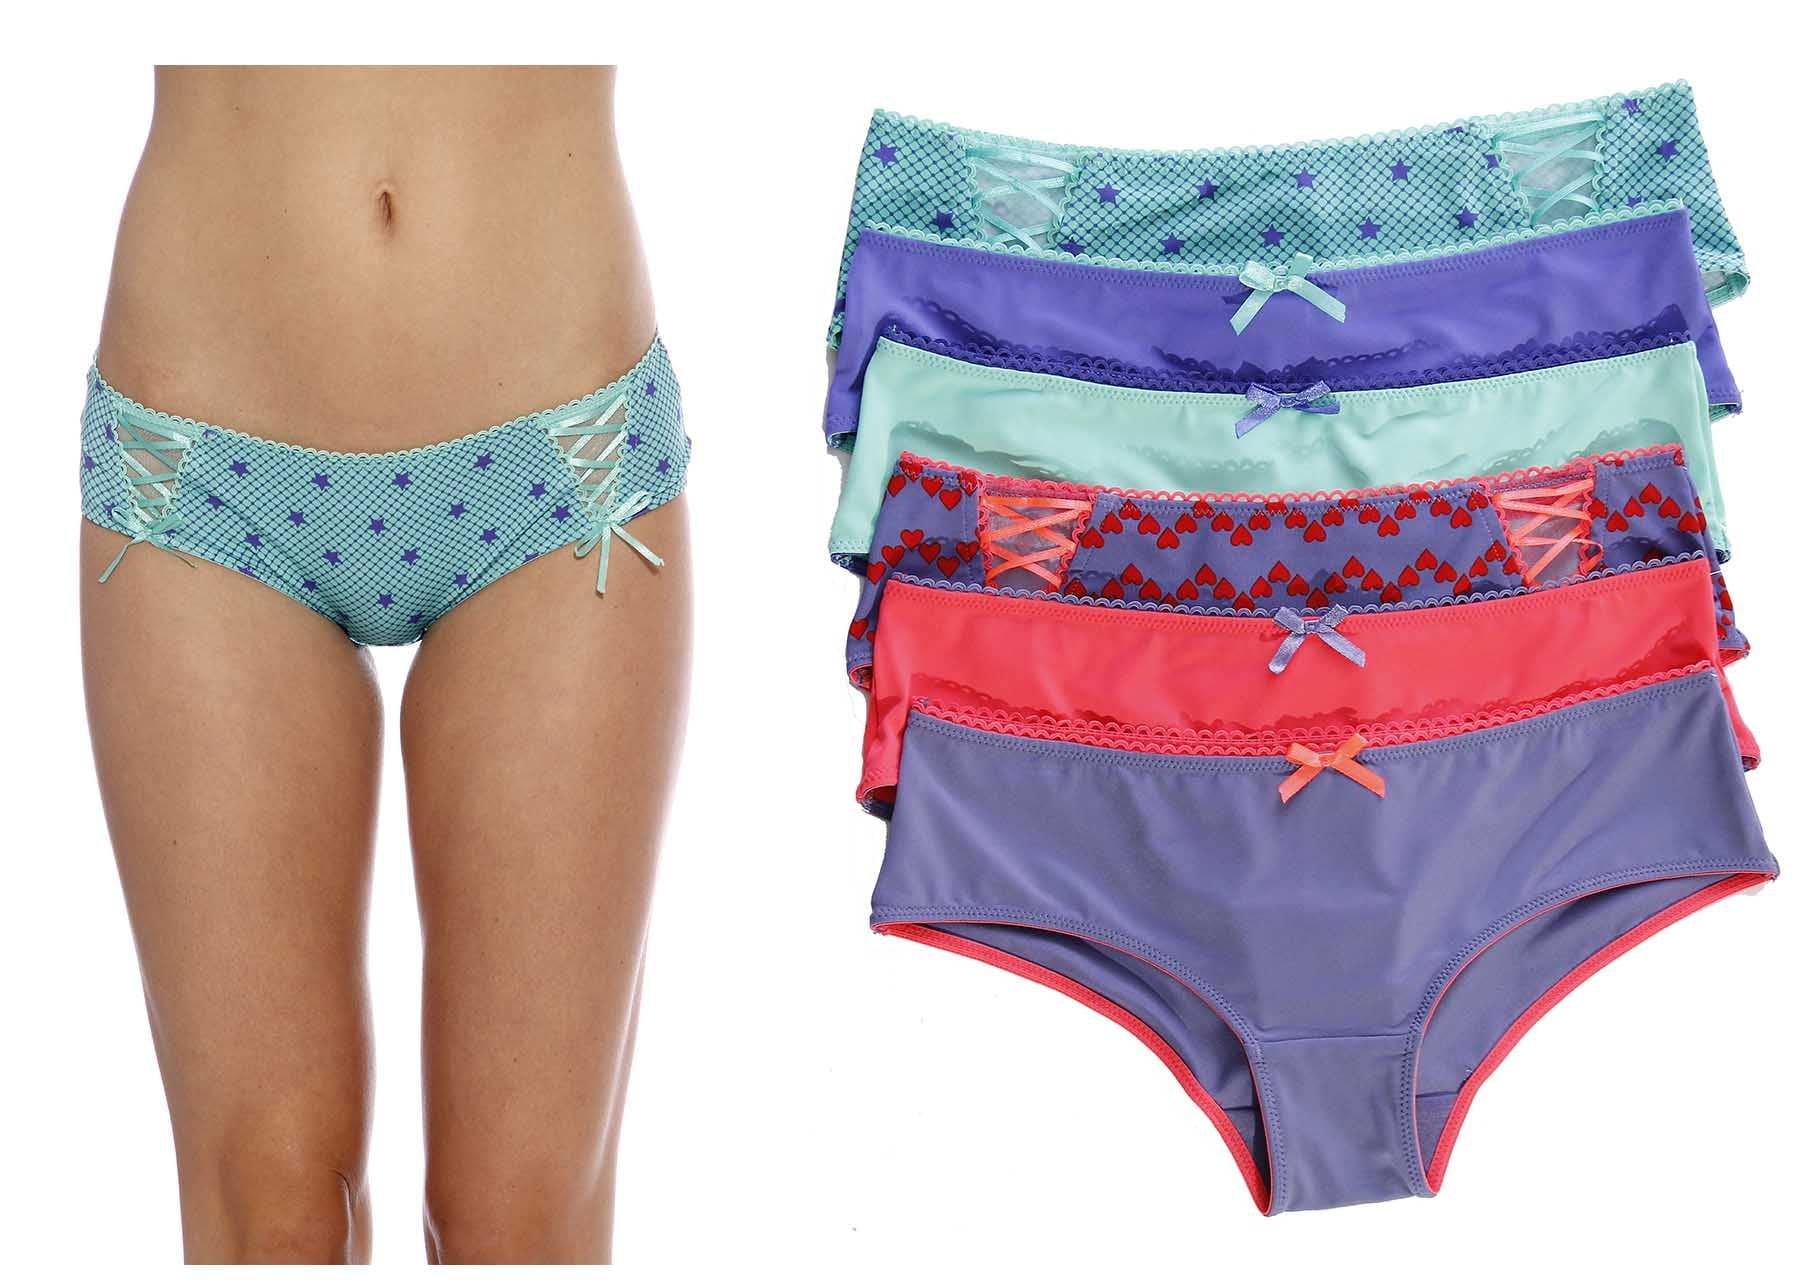 Lollanda Matching Bra And Panty Sets For Women Sexy Padded Bra Underwear